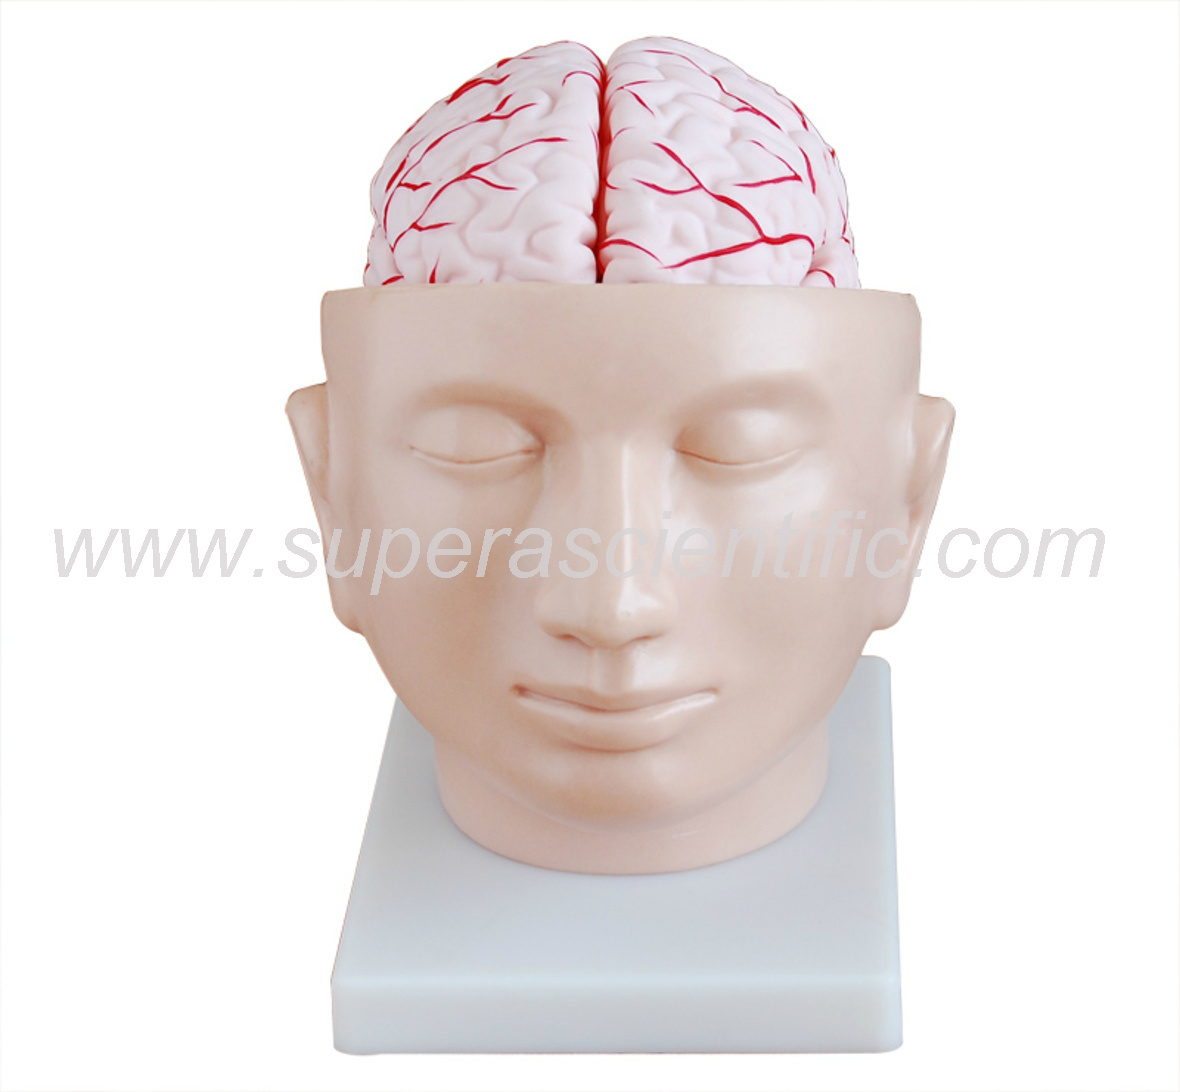 SA-318 Brain with Arteries on Head